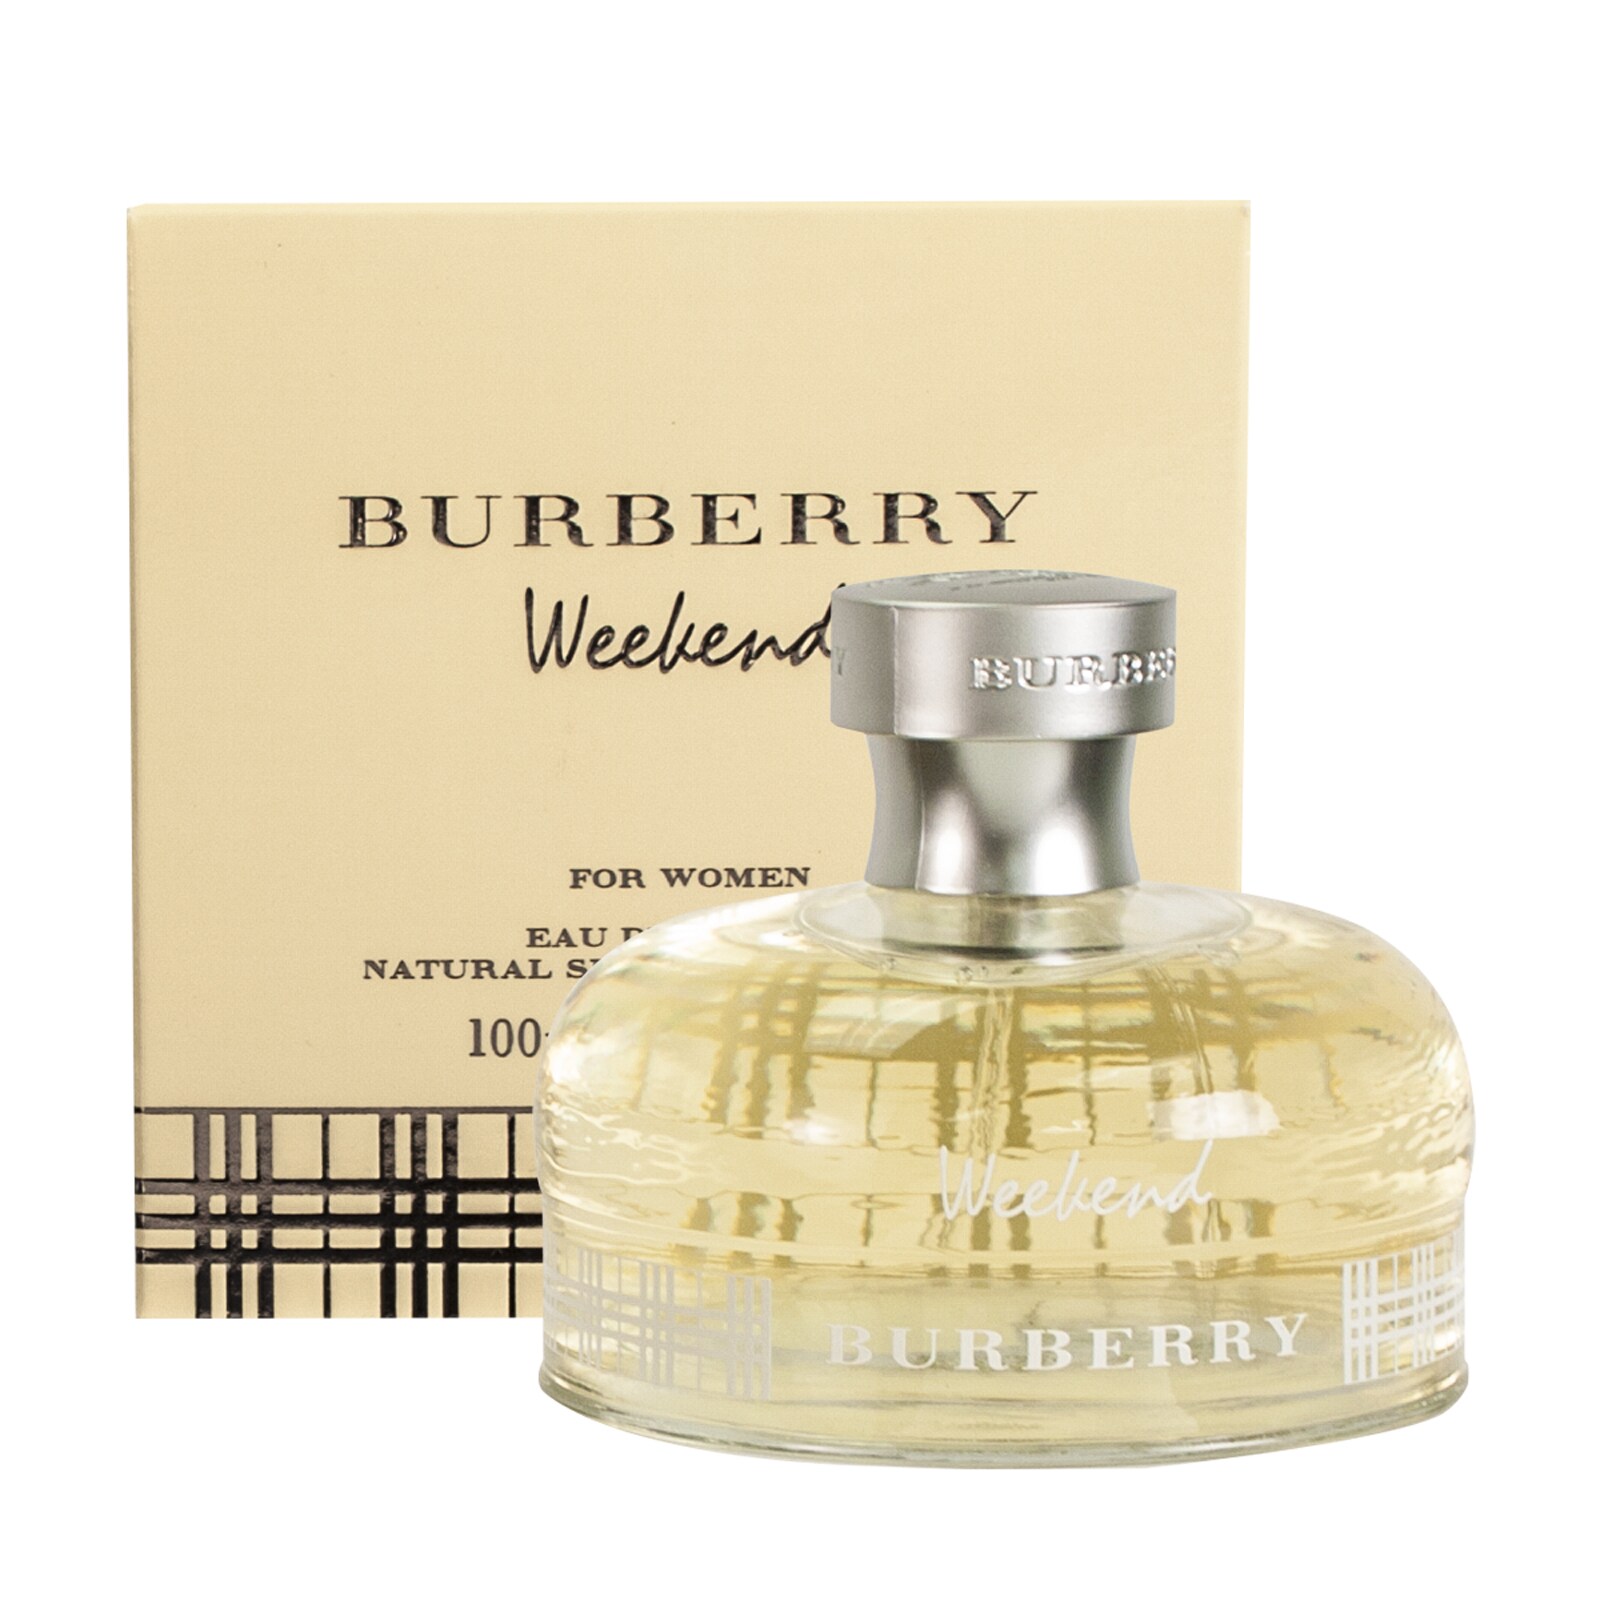 burberry weekend 3.4 oz women's perfume